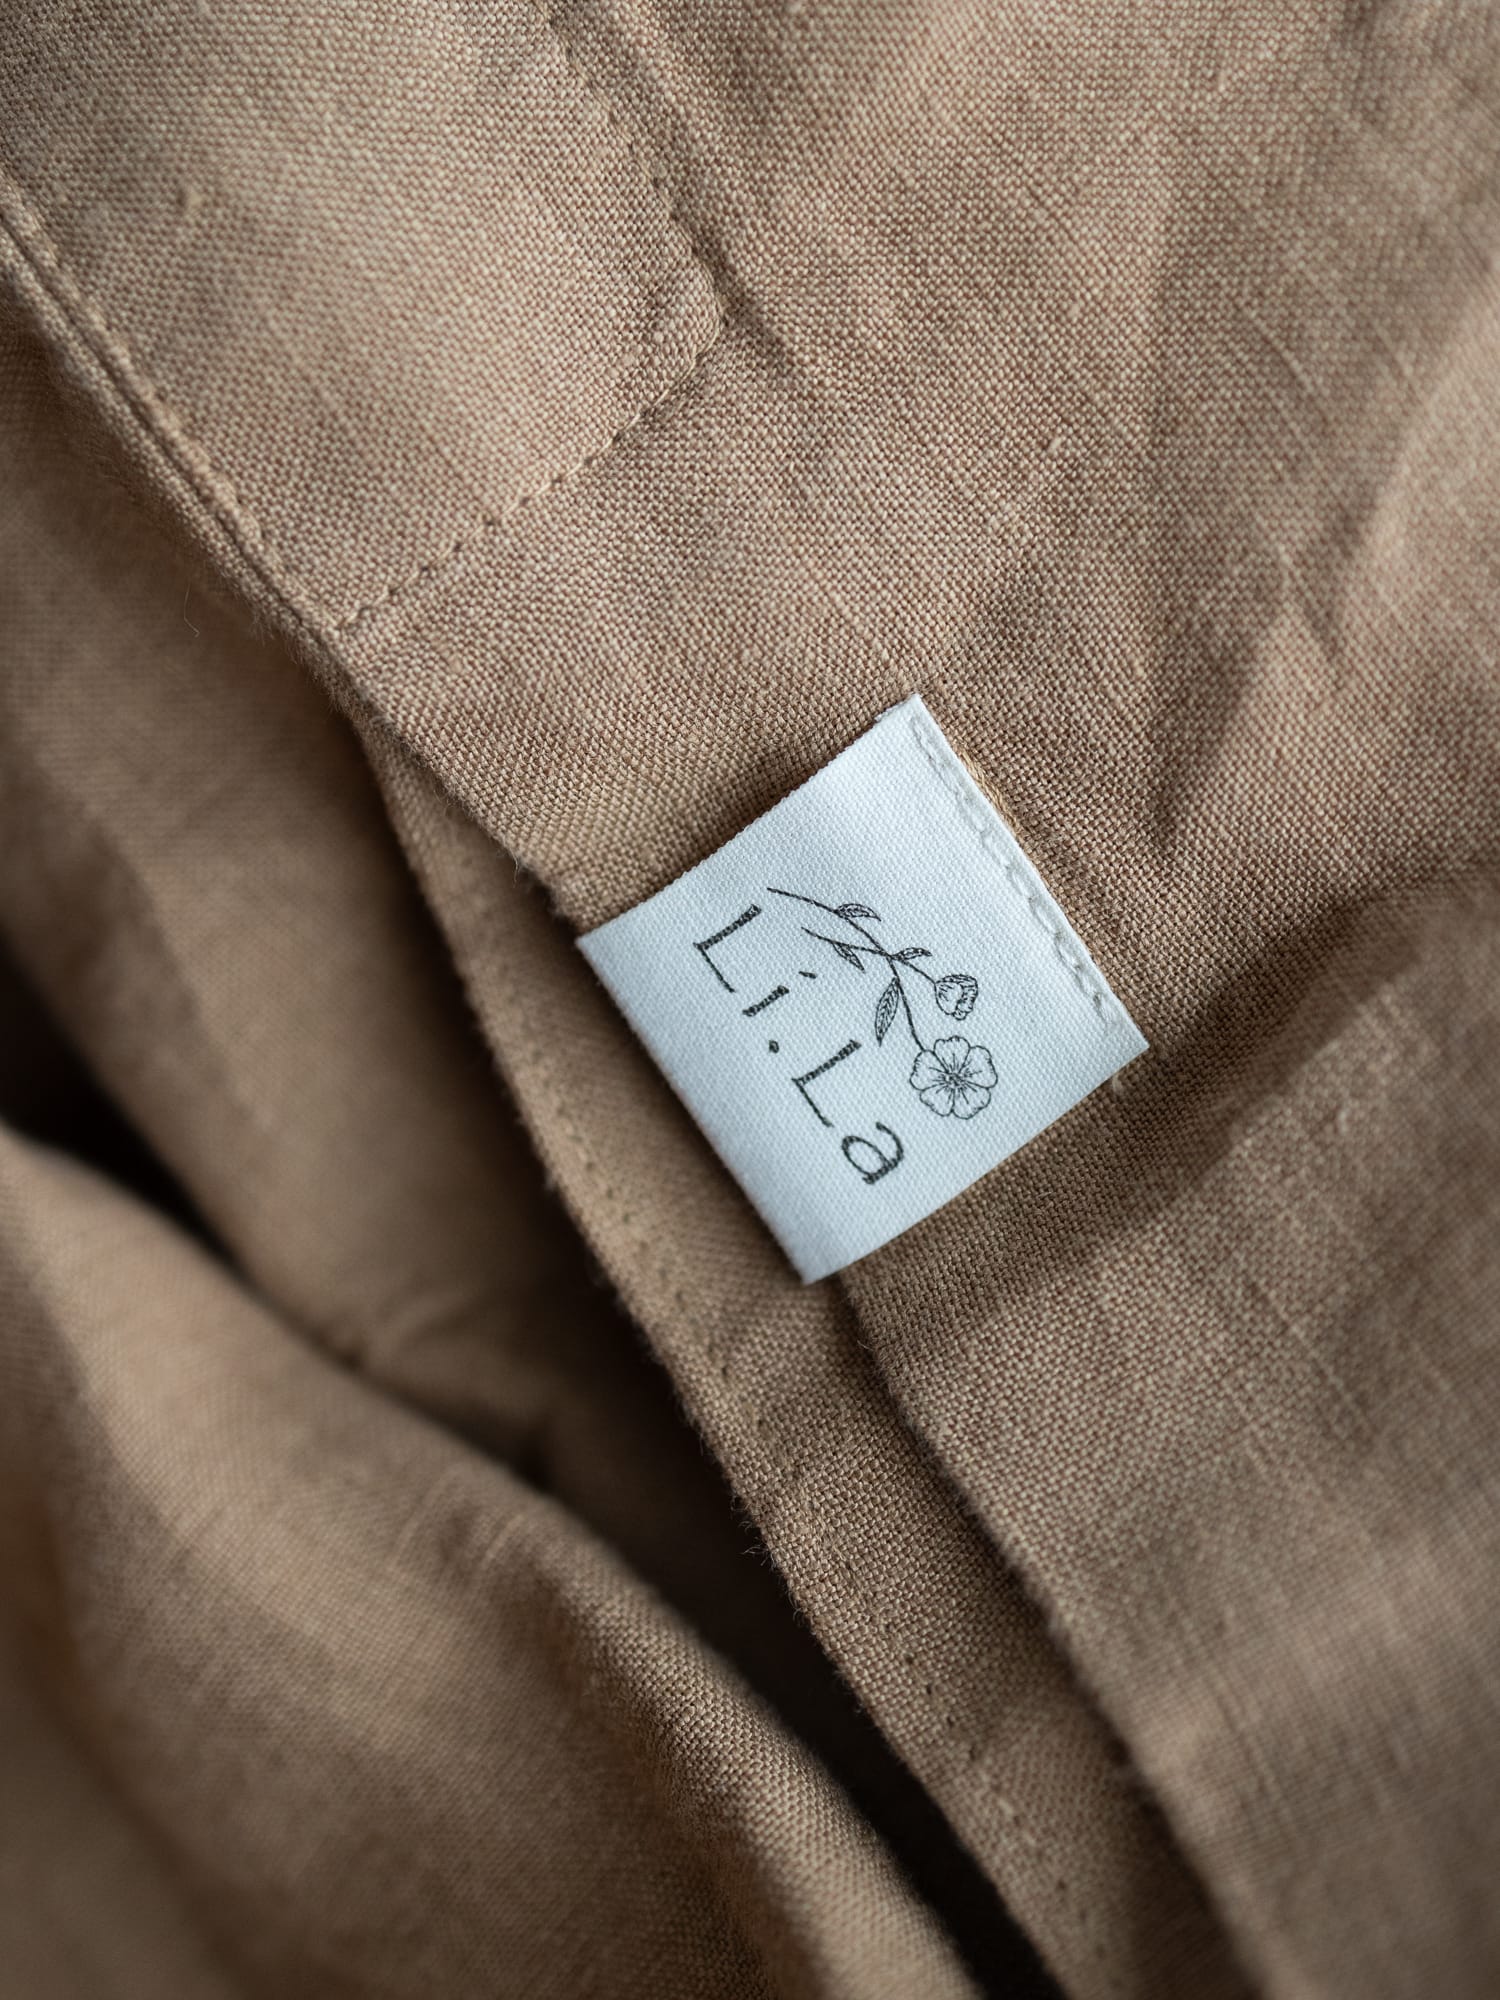 100% linnen - Dekbedovertrek set - 2 kussenslopen - Lits-Jumeaux (240 x 220 cm) - Camel bruin - Linnen Label